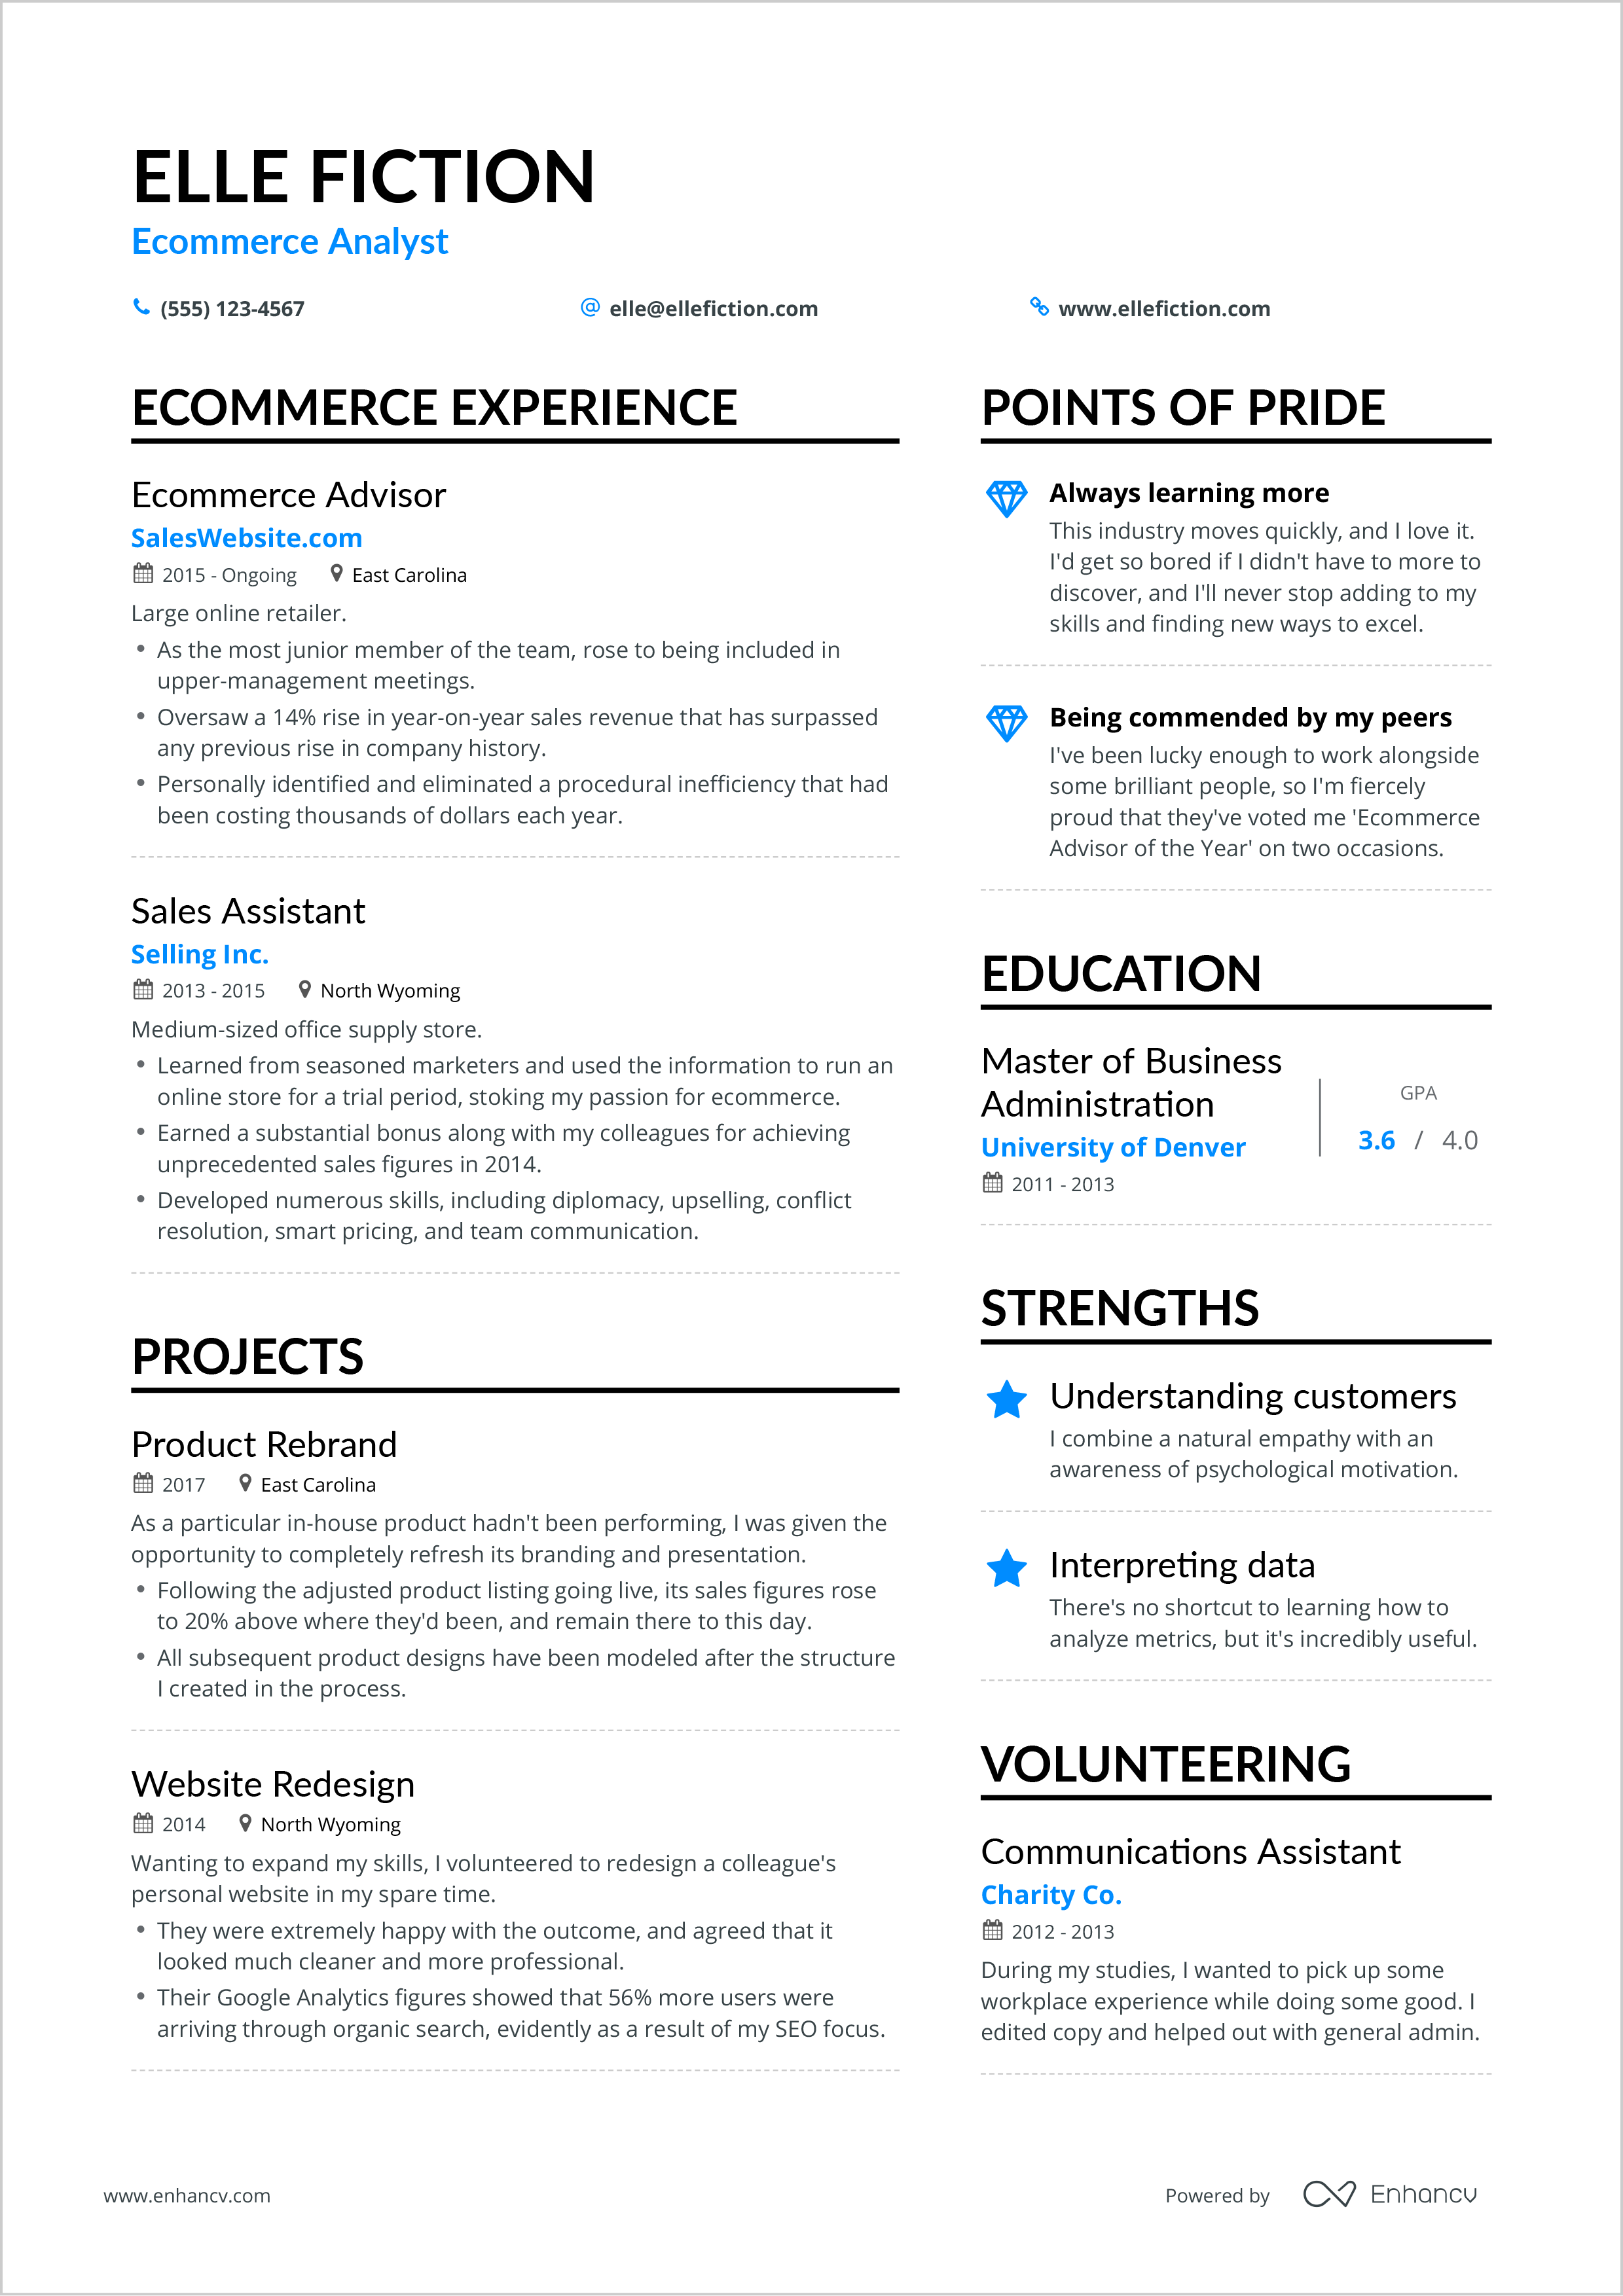 Enhancv 3 Steps To Write A Killer eCommerce Resume ecommerce resume